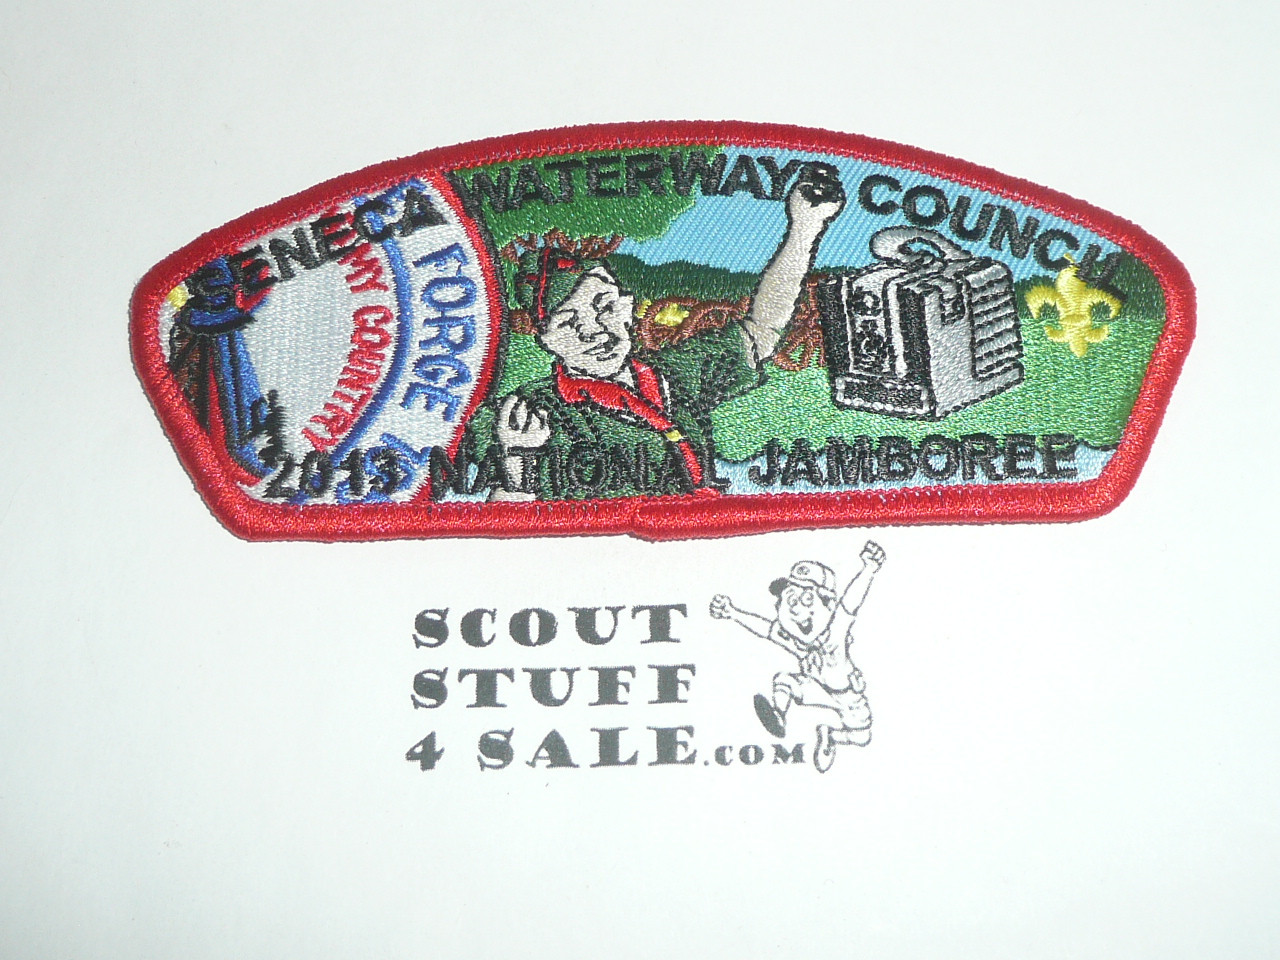 2013 National Jamboree JSP - Seneca Waterways Council